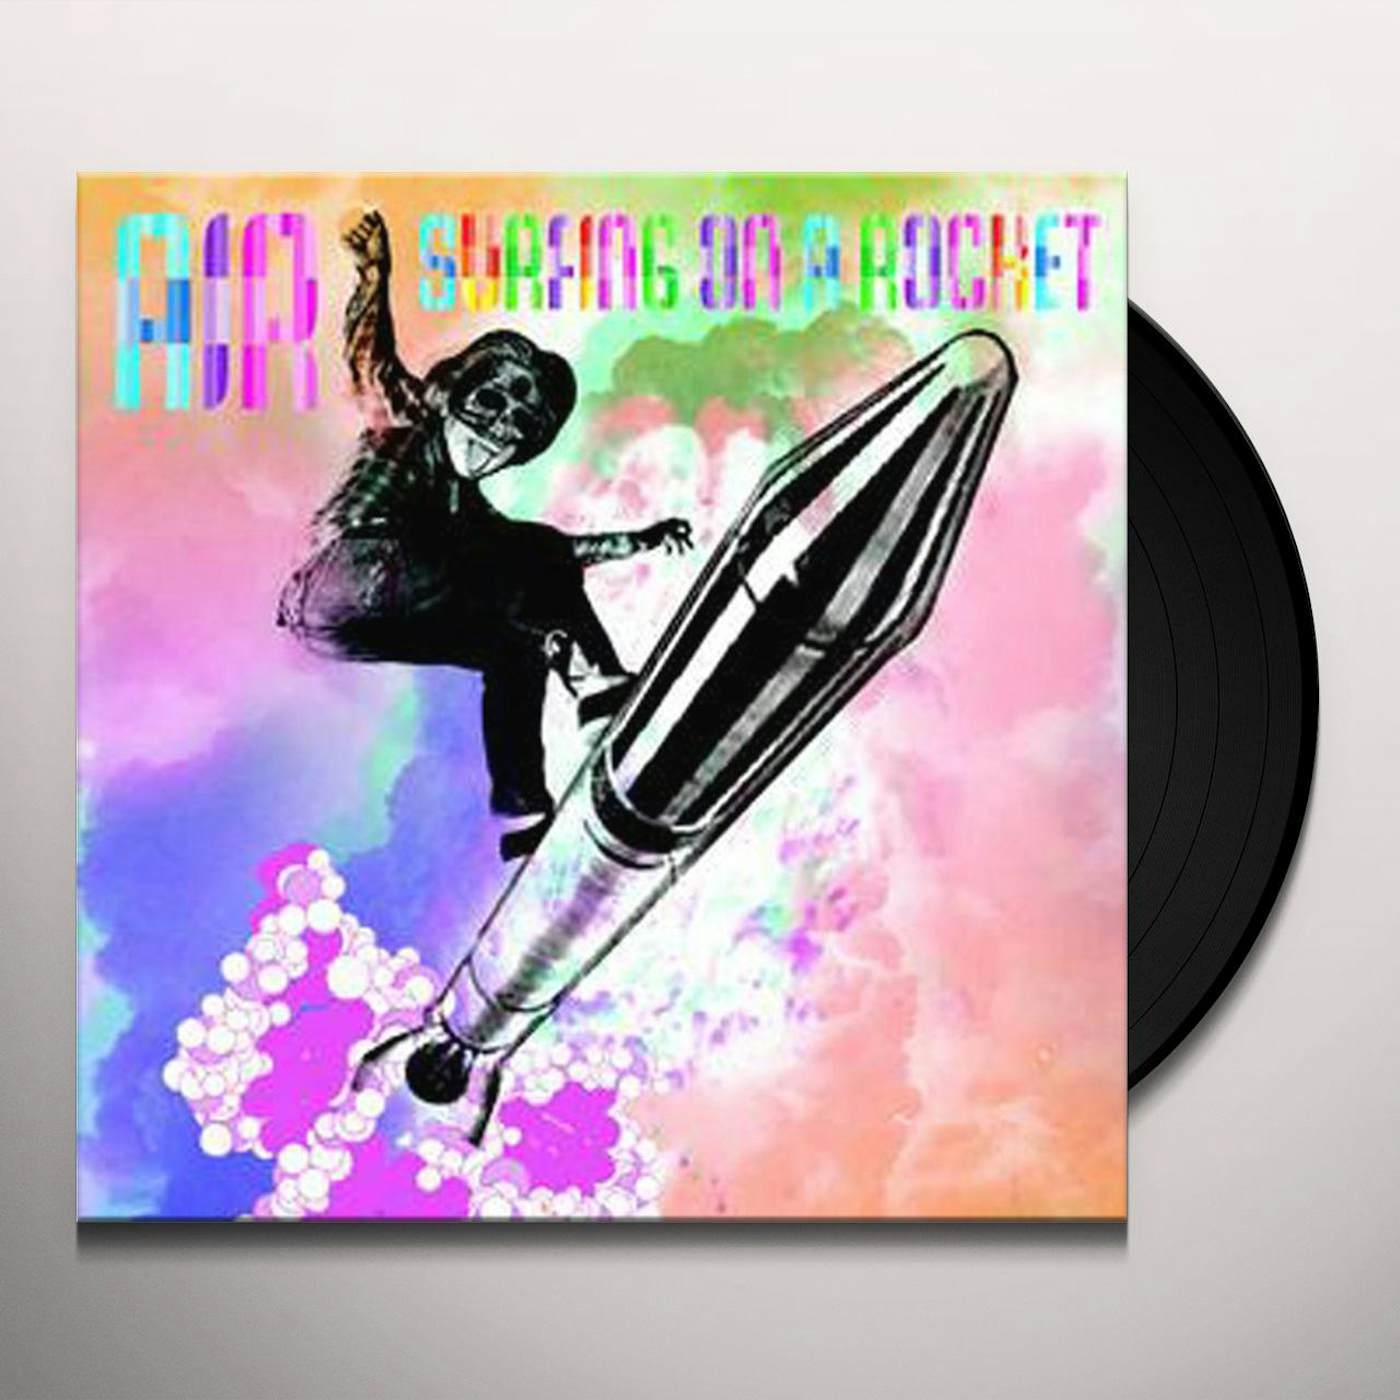 Air Surfing On A Rocket Vinyl Record